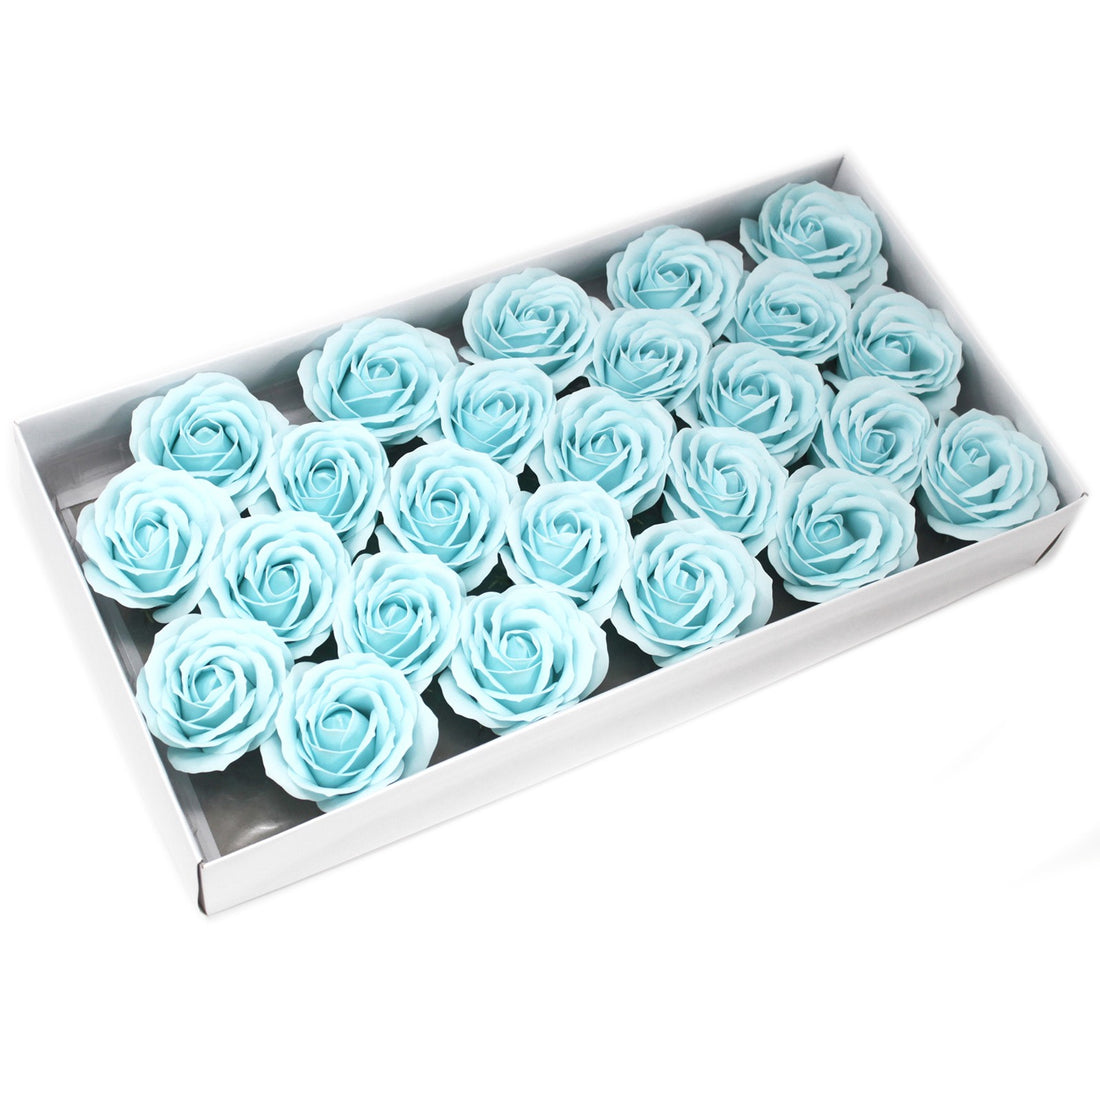 Craft Soap Flowers - Lrg Rose - Baby Blue x 10 pcs